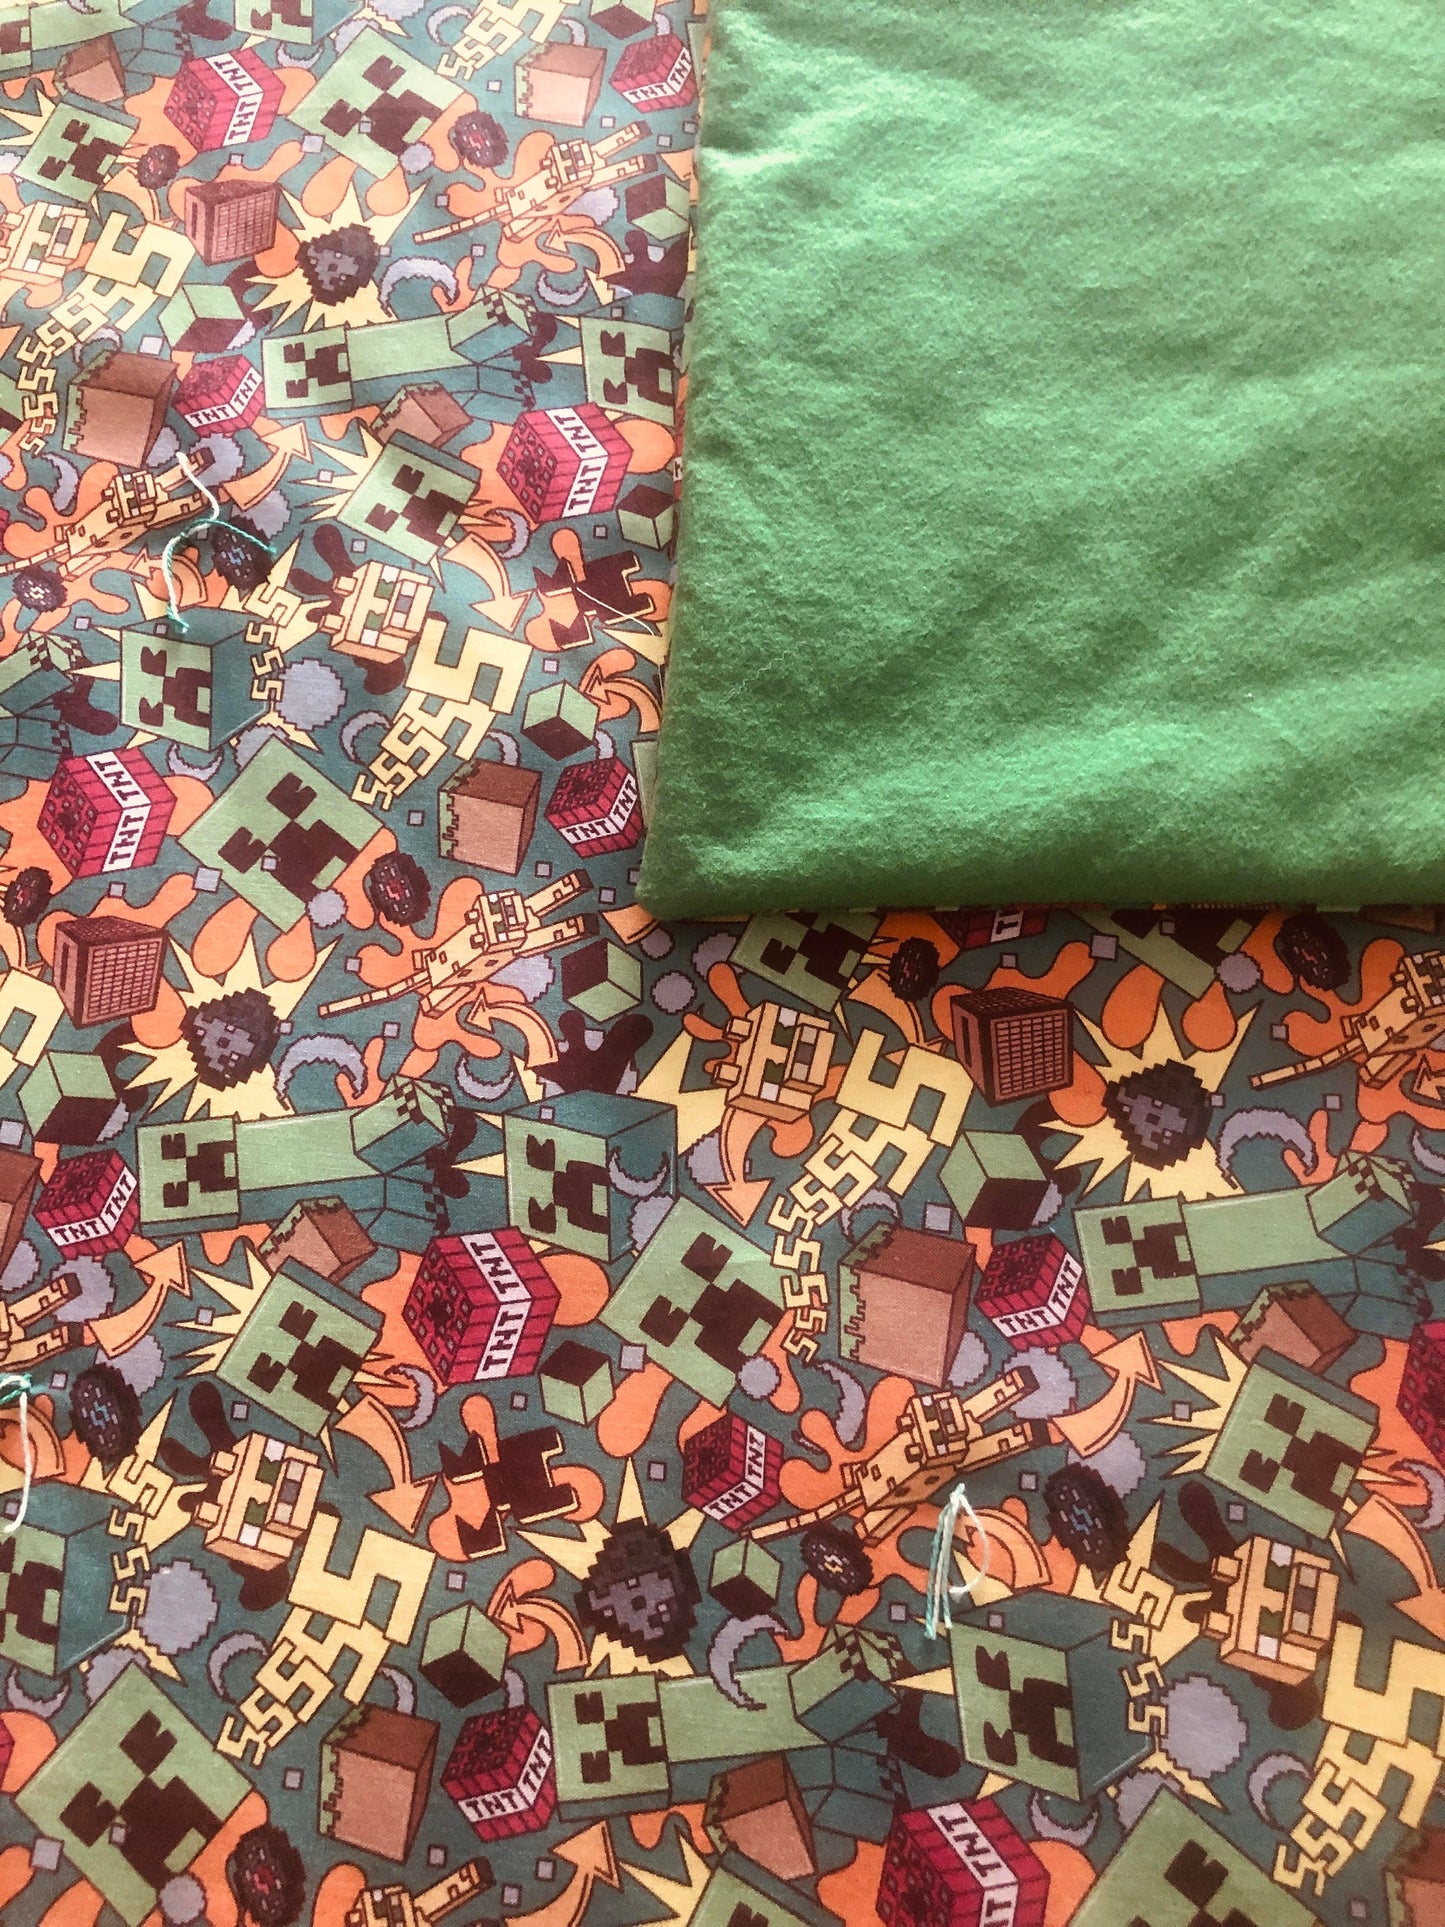 Minecraft Lap Quilt/Blanket in Vivid Colors